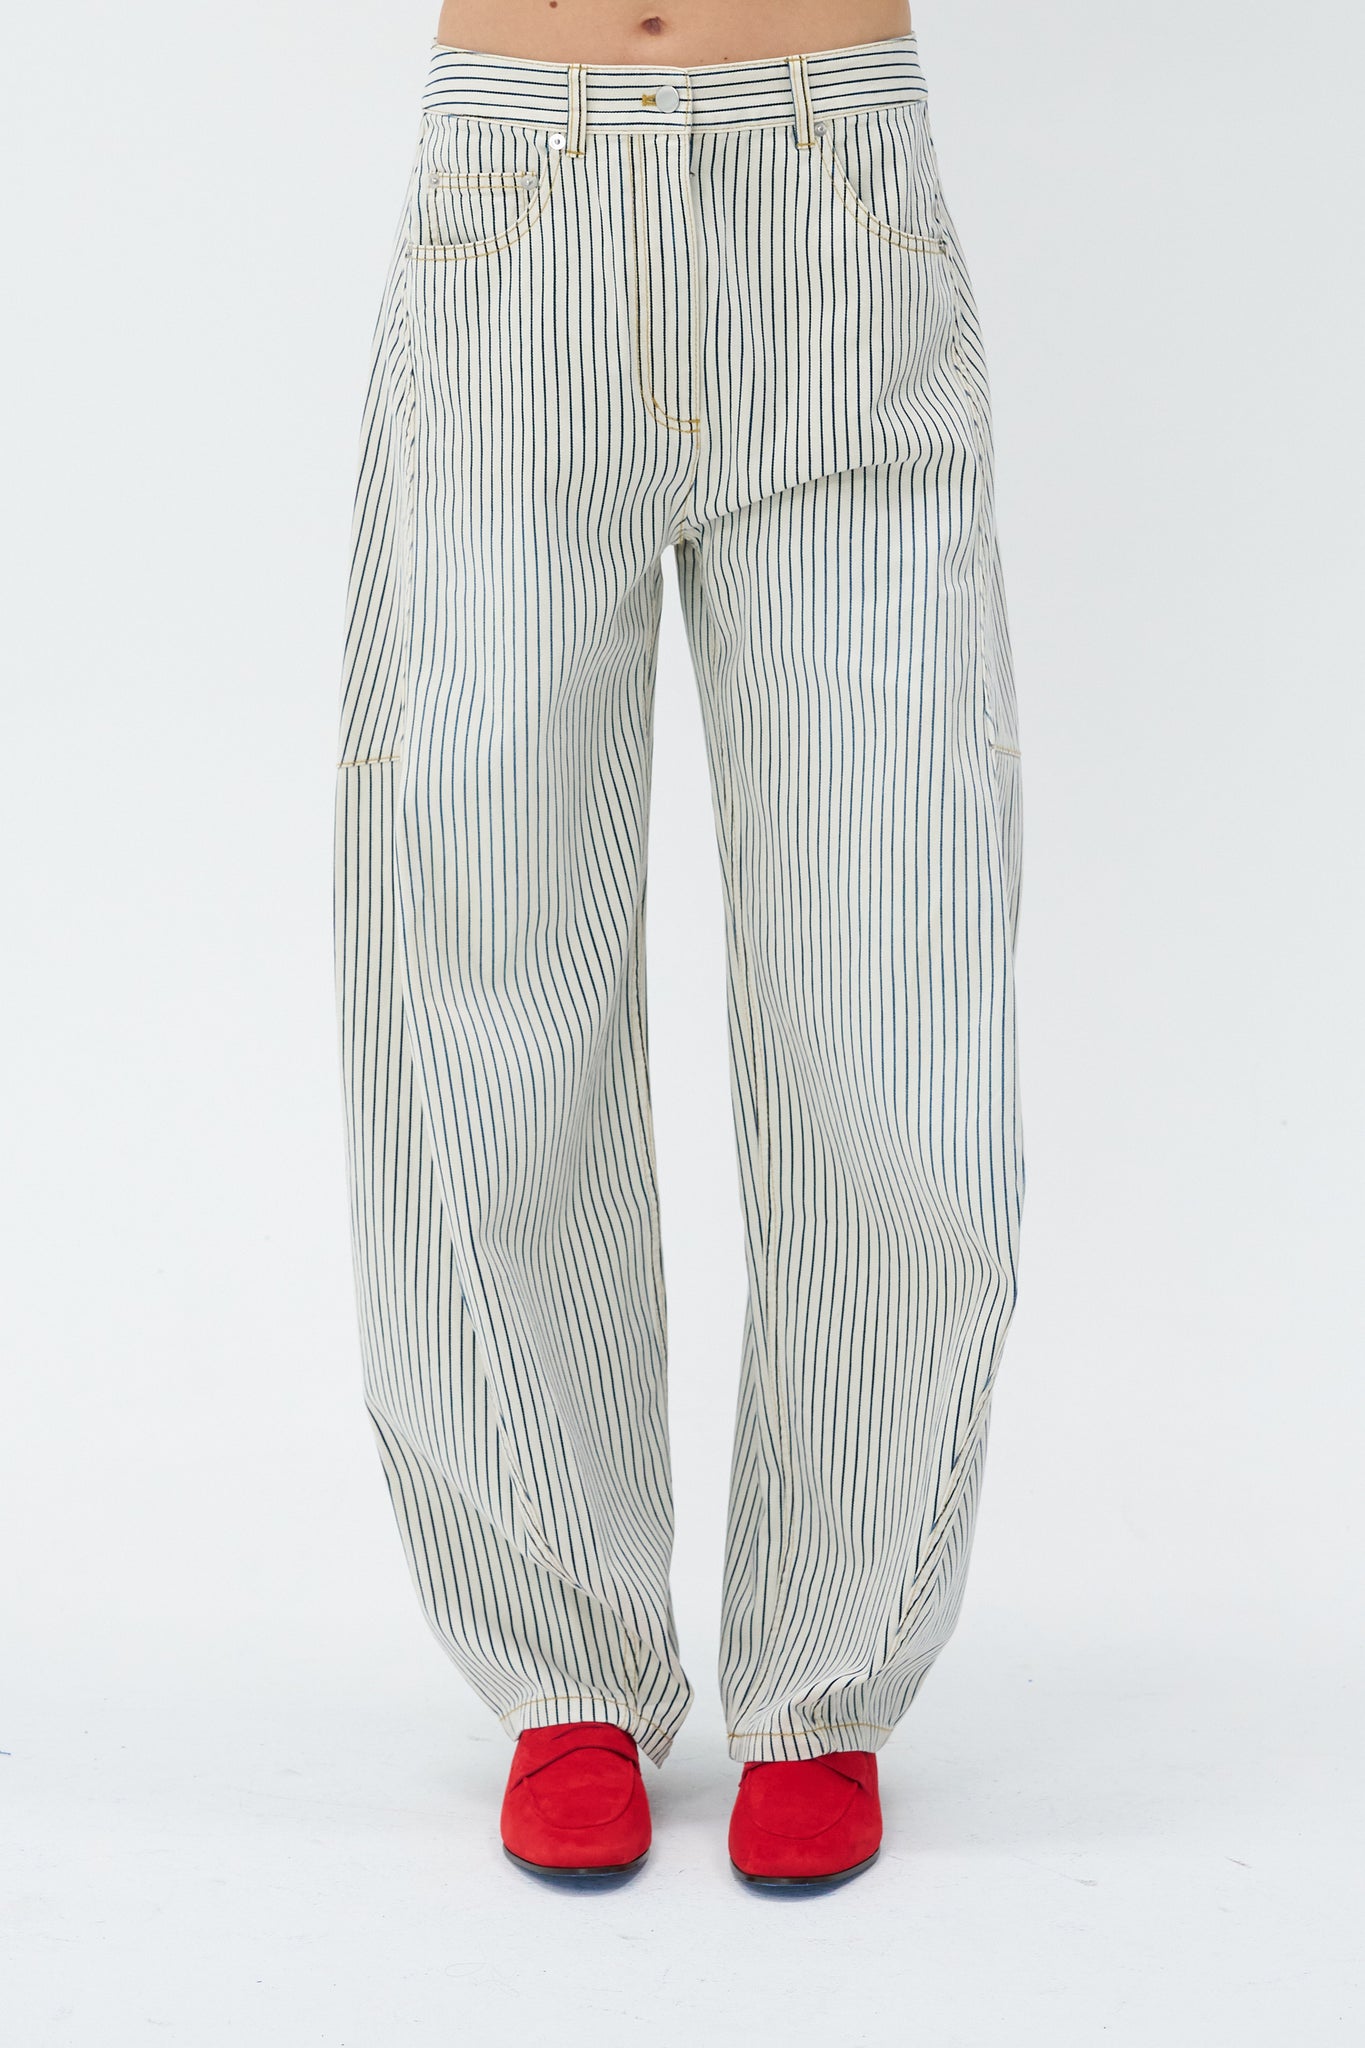 TIBI - Sid Jean Stone Washed Stripe Pant, Navy Multi